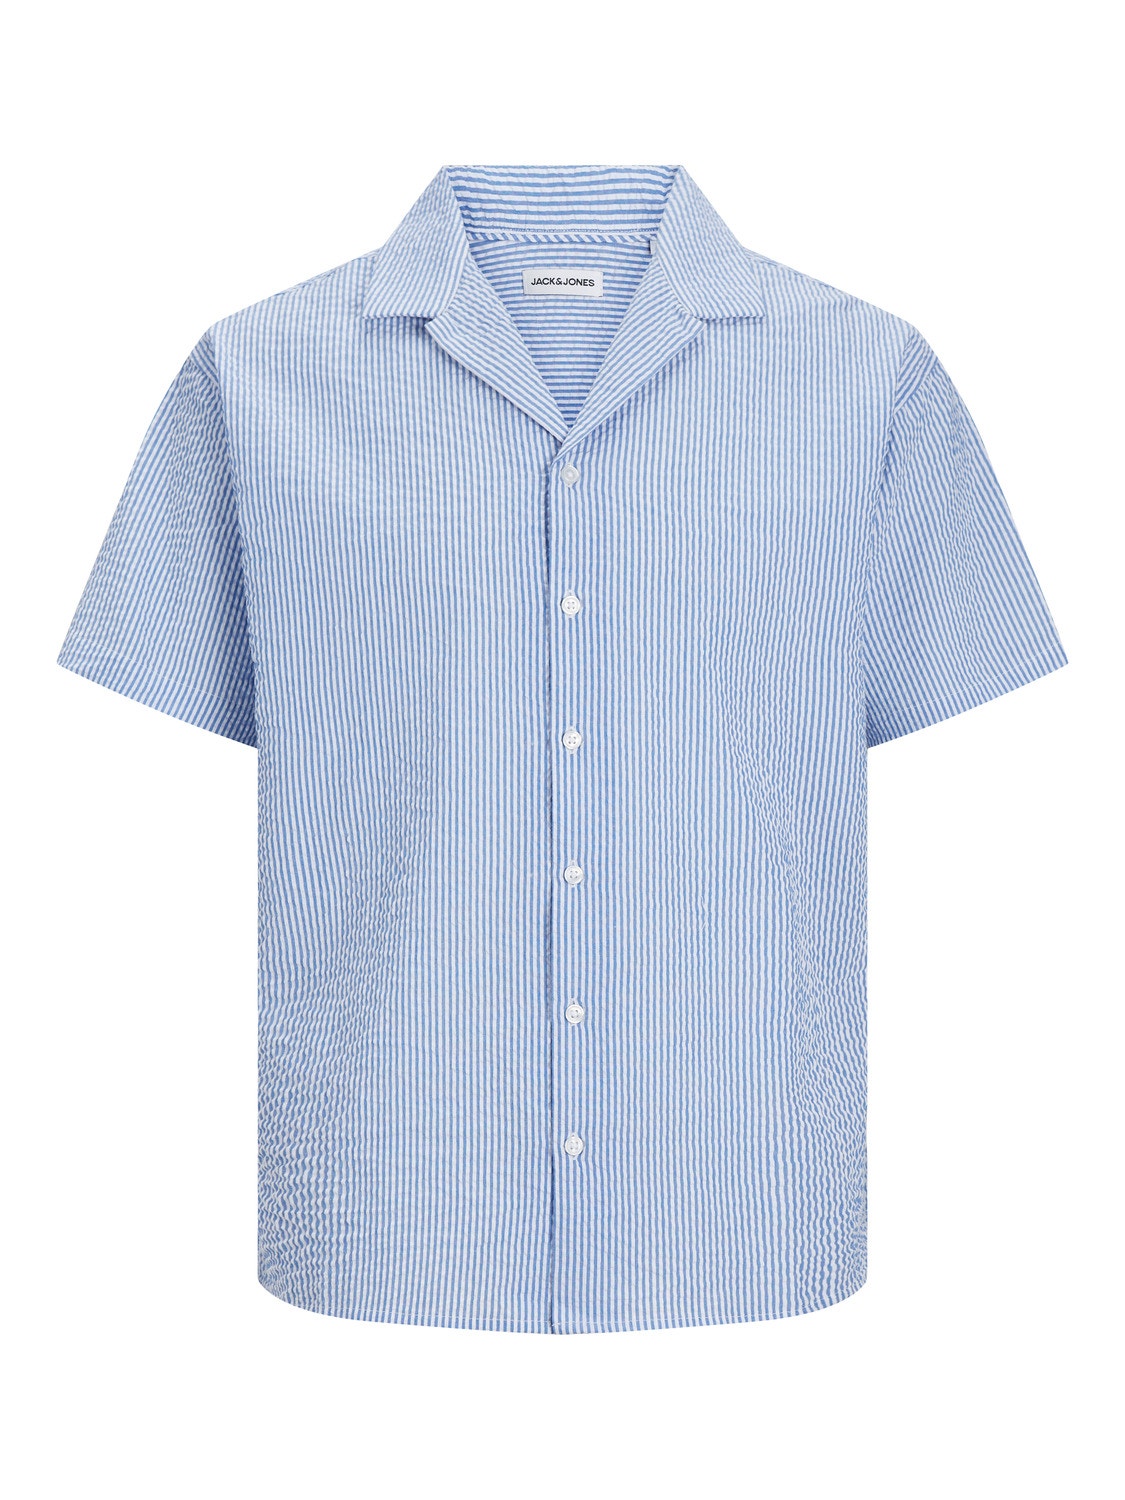 Jack & Jones Plus Size Relaxed Fit Skjorta -Cashmere Blue - 12254832